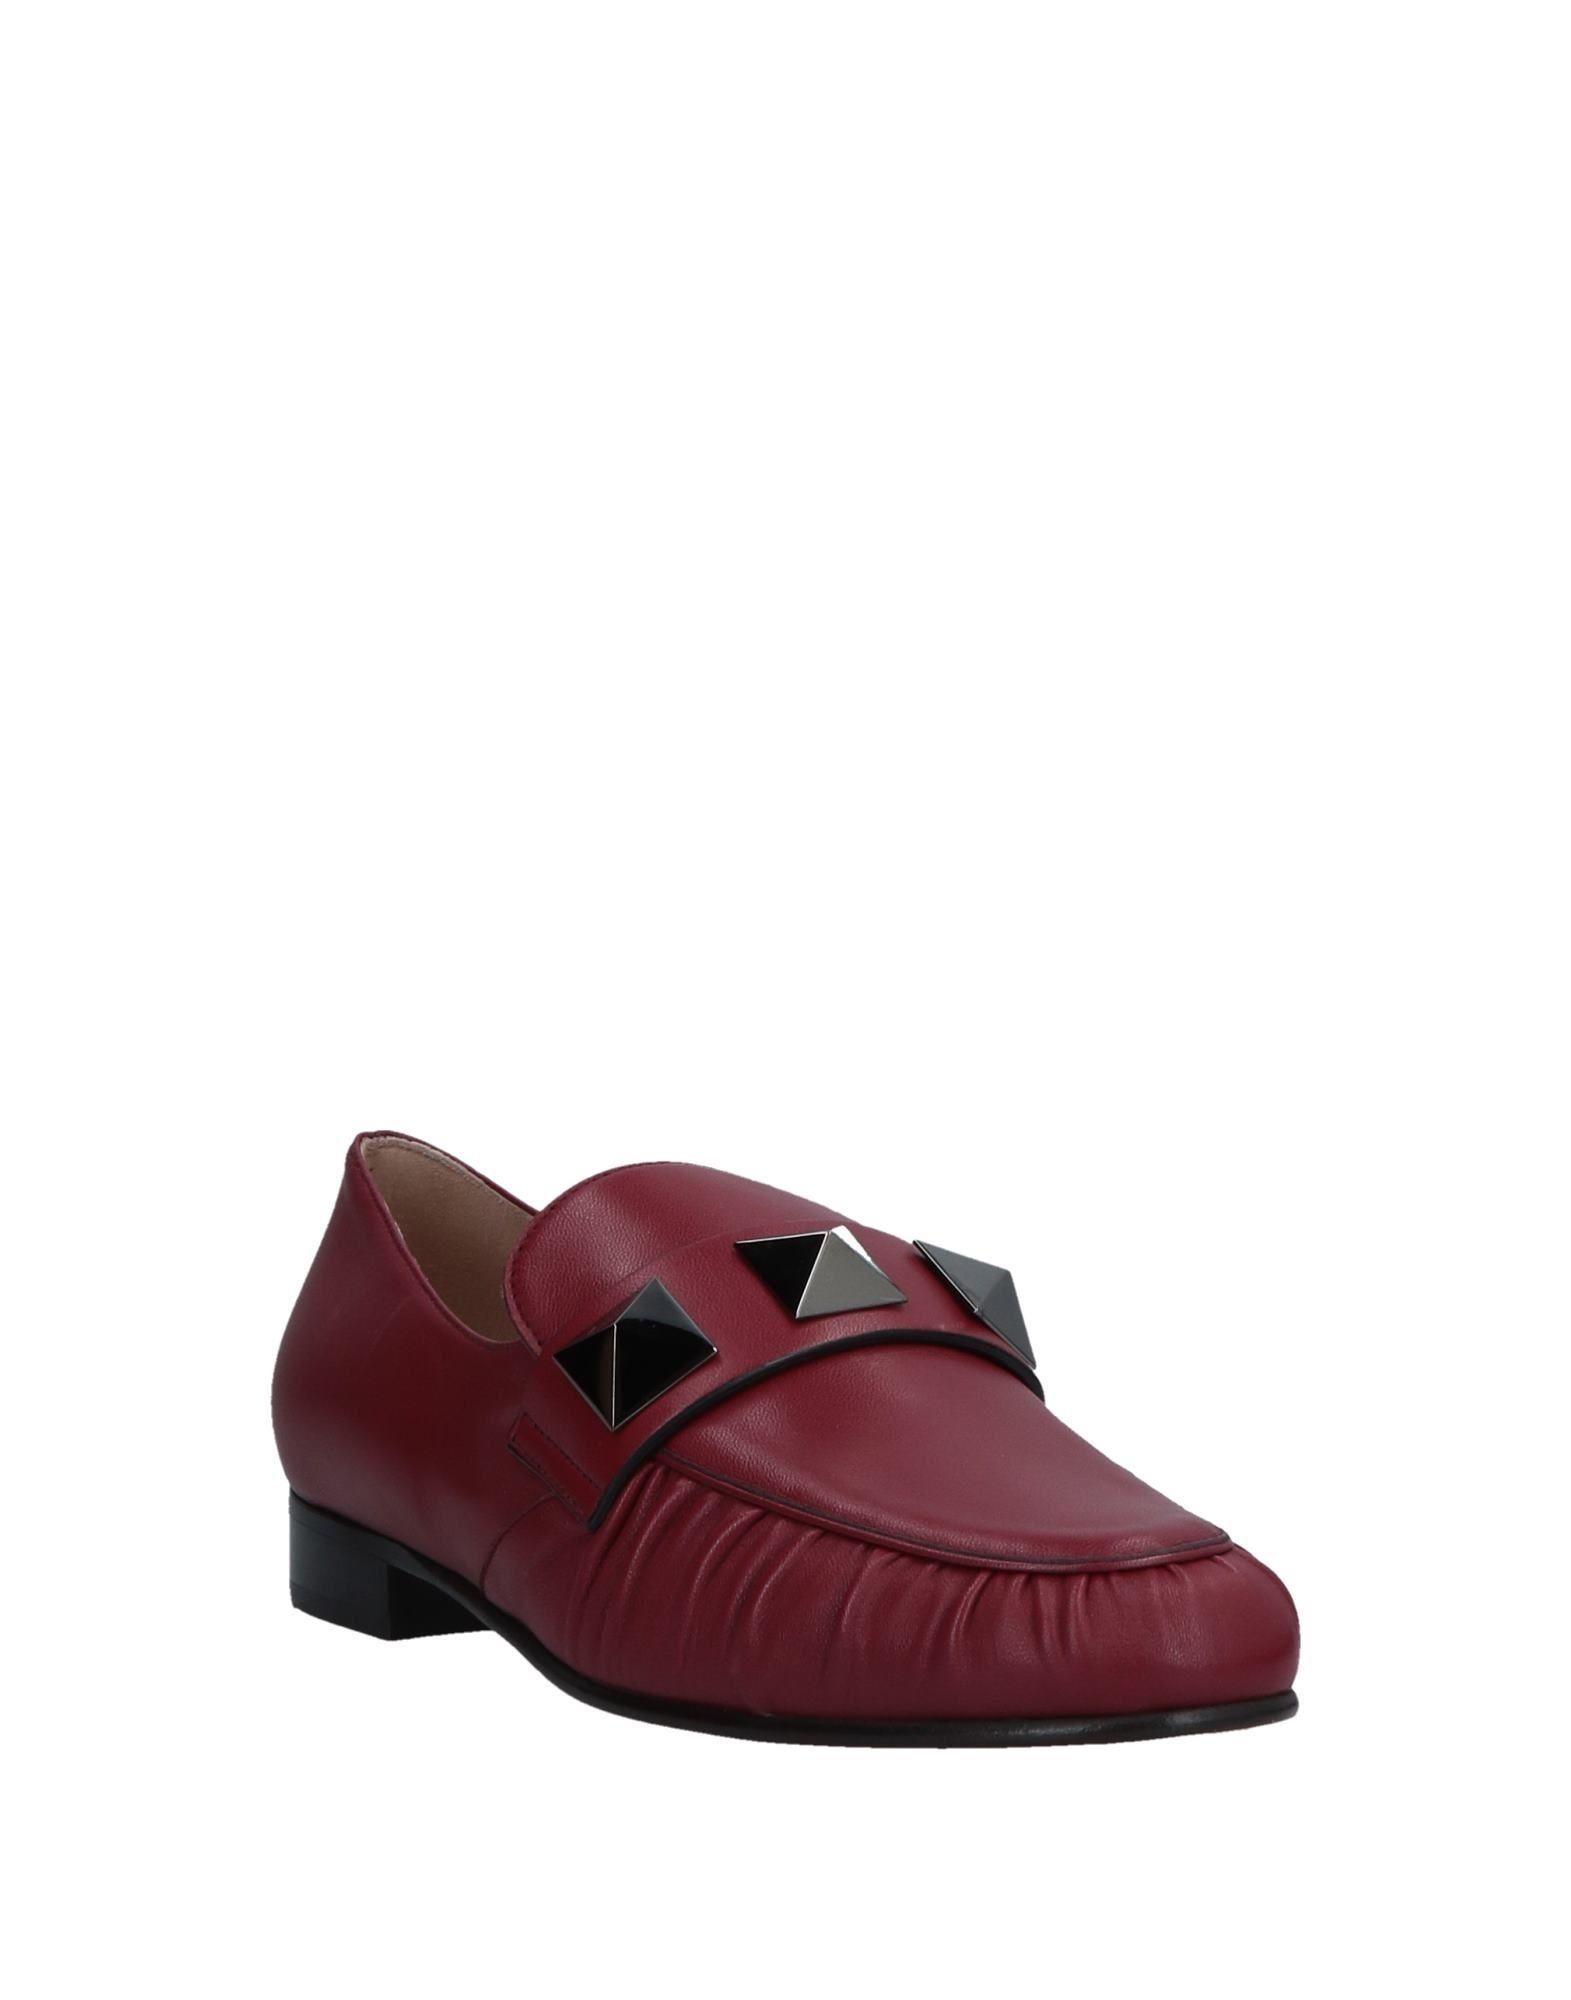 Valentino Garavani Leather Loafer in Maroon (Red) - Lyst